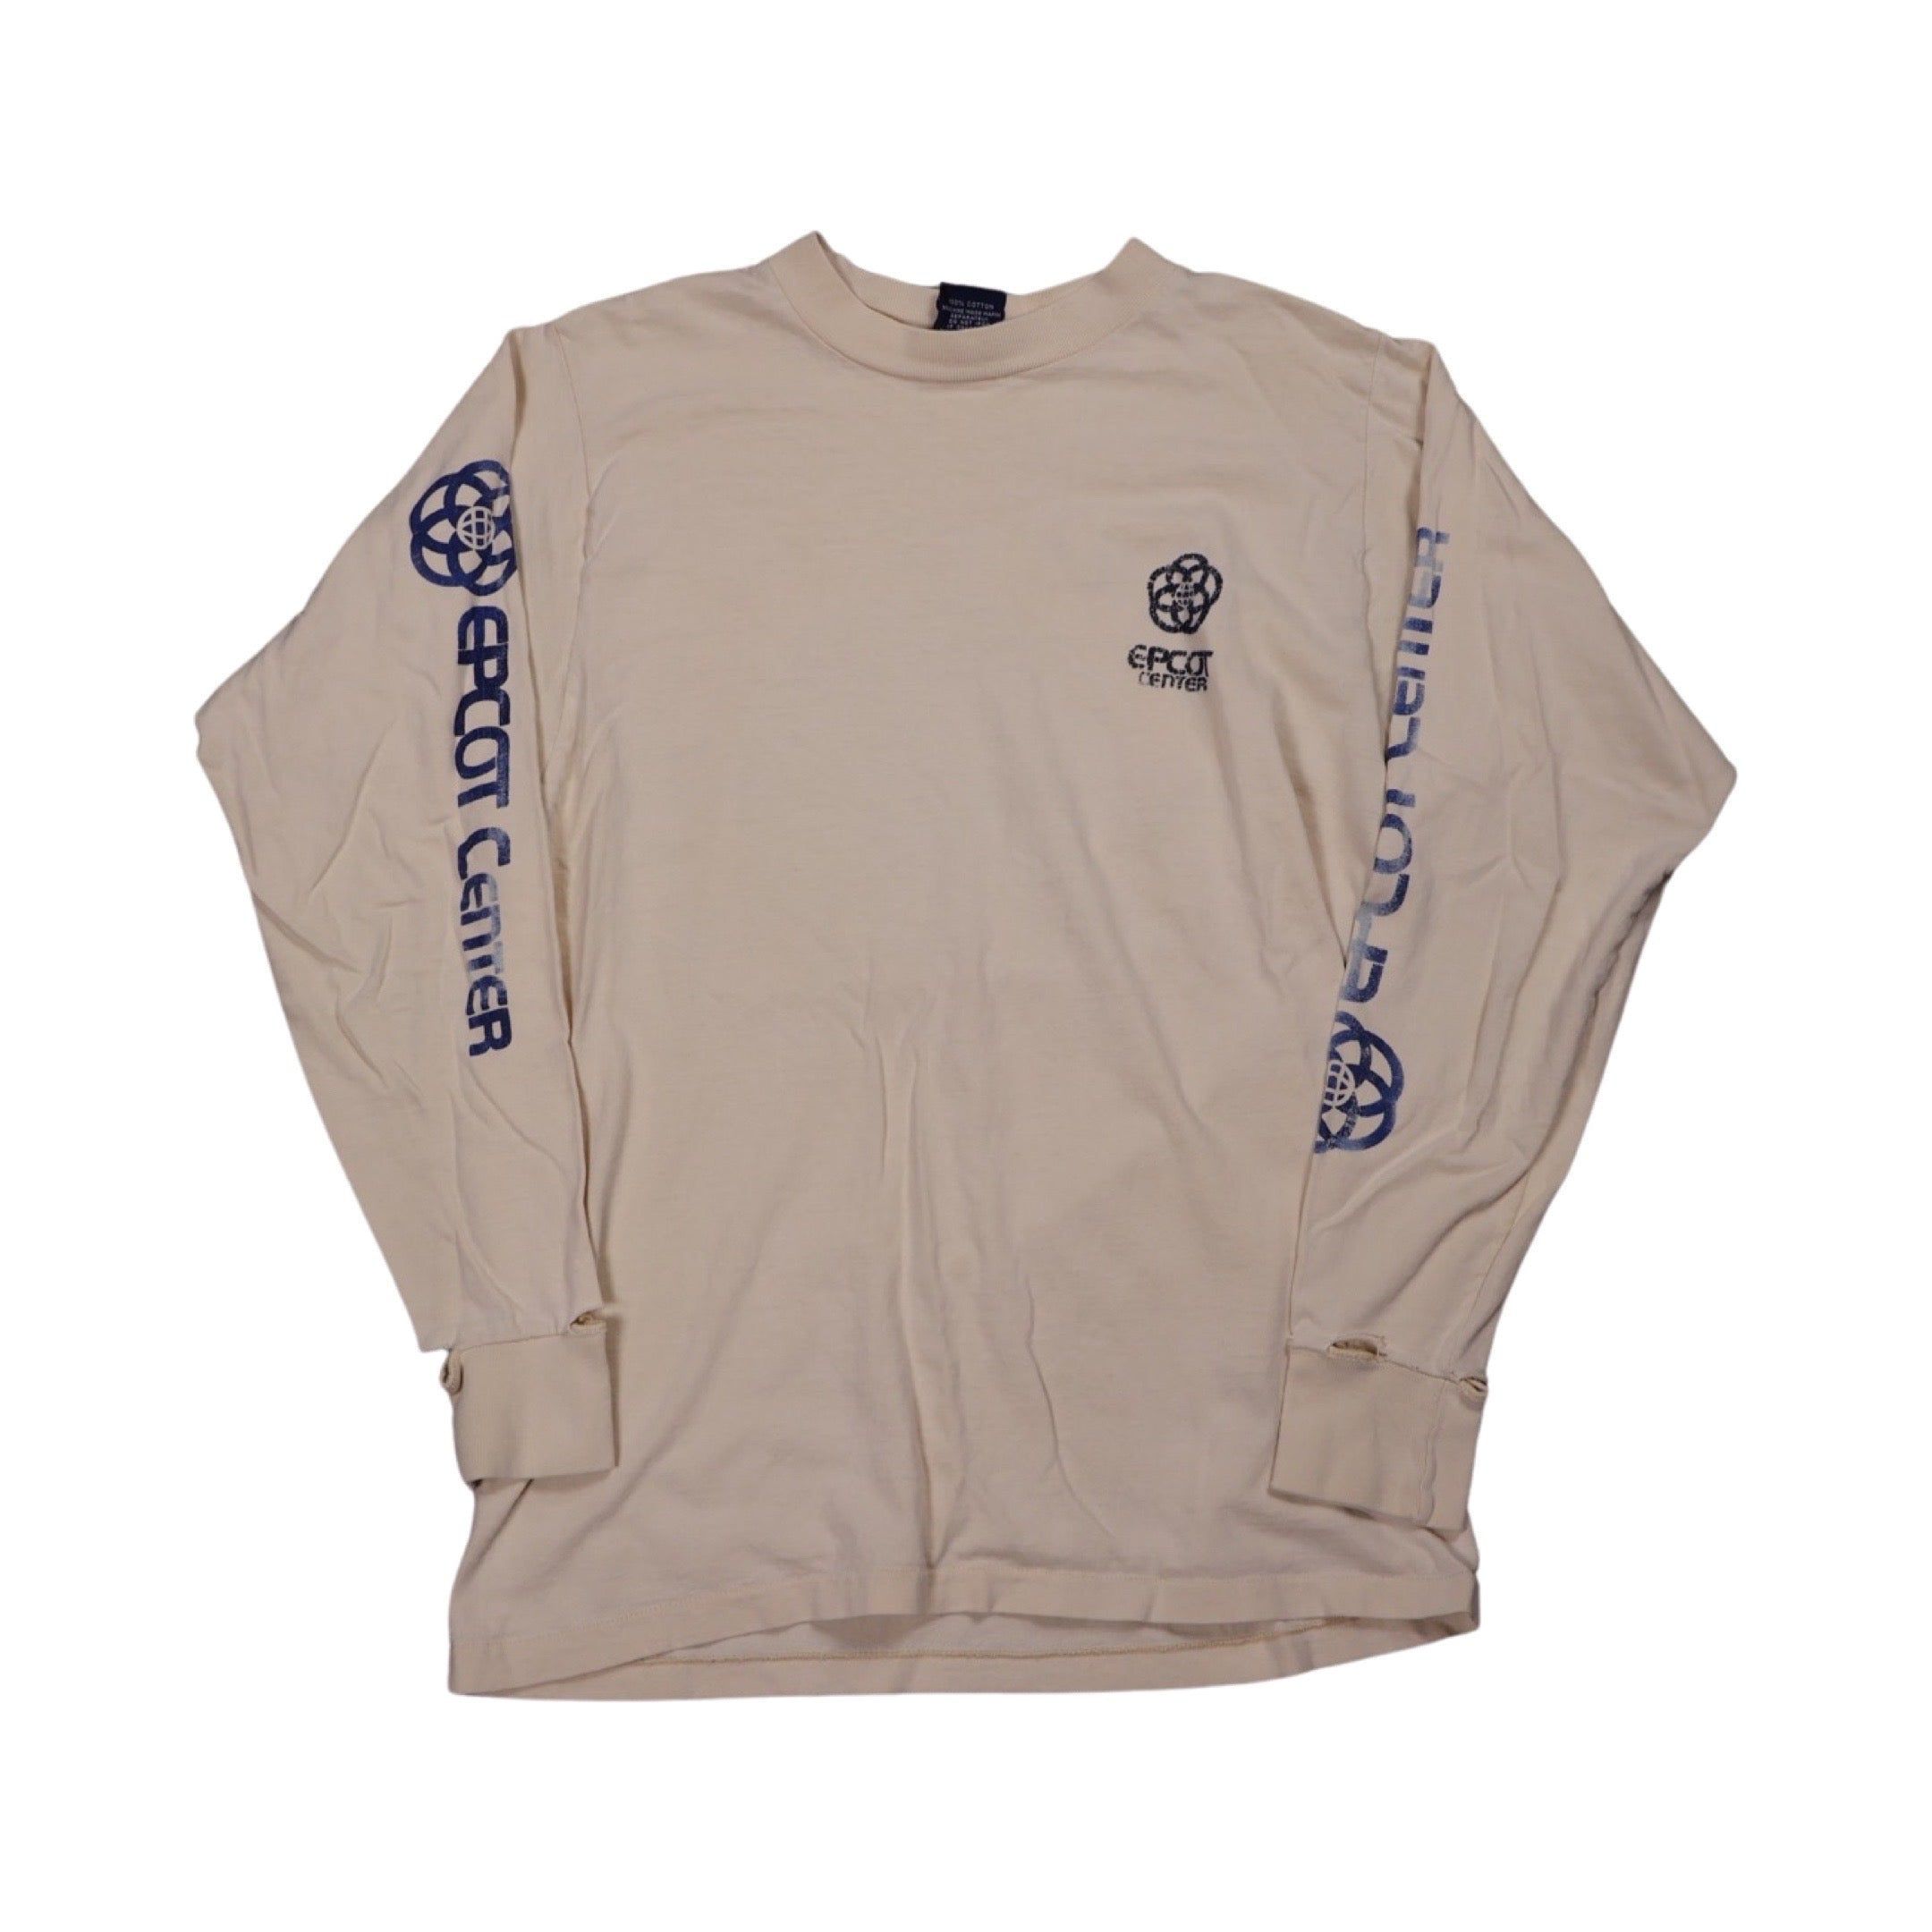 Epcot 1982 Longsleeve T-Shirt (Small)